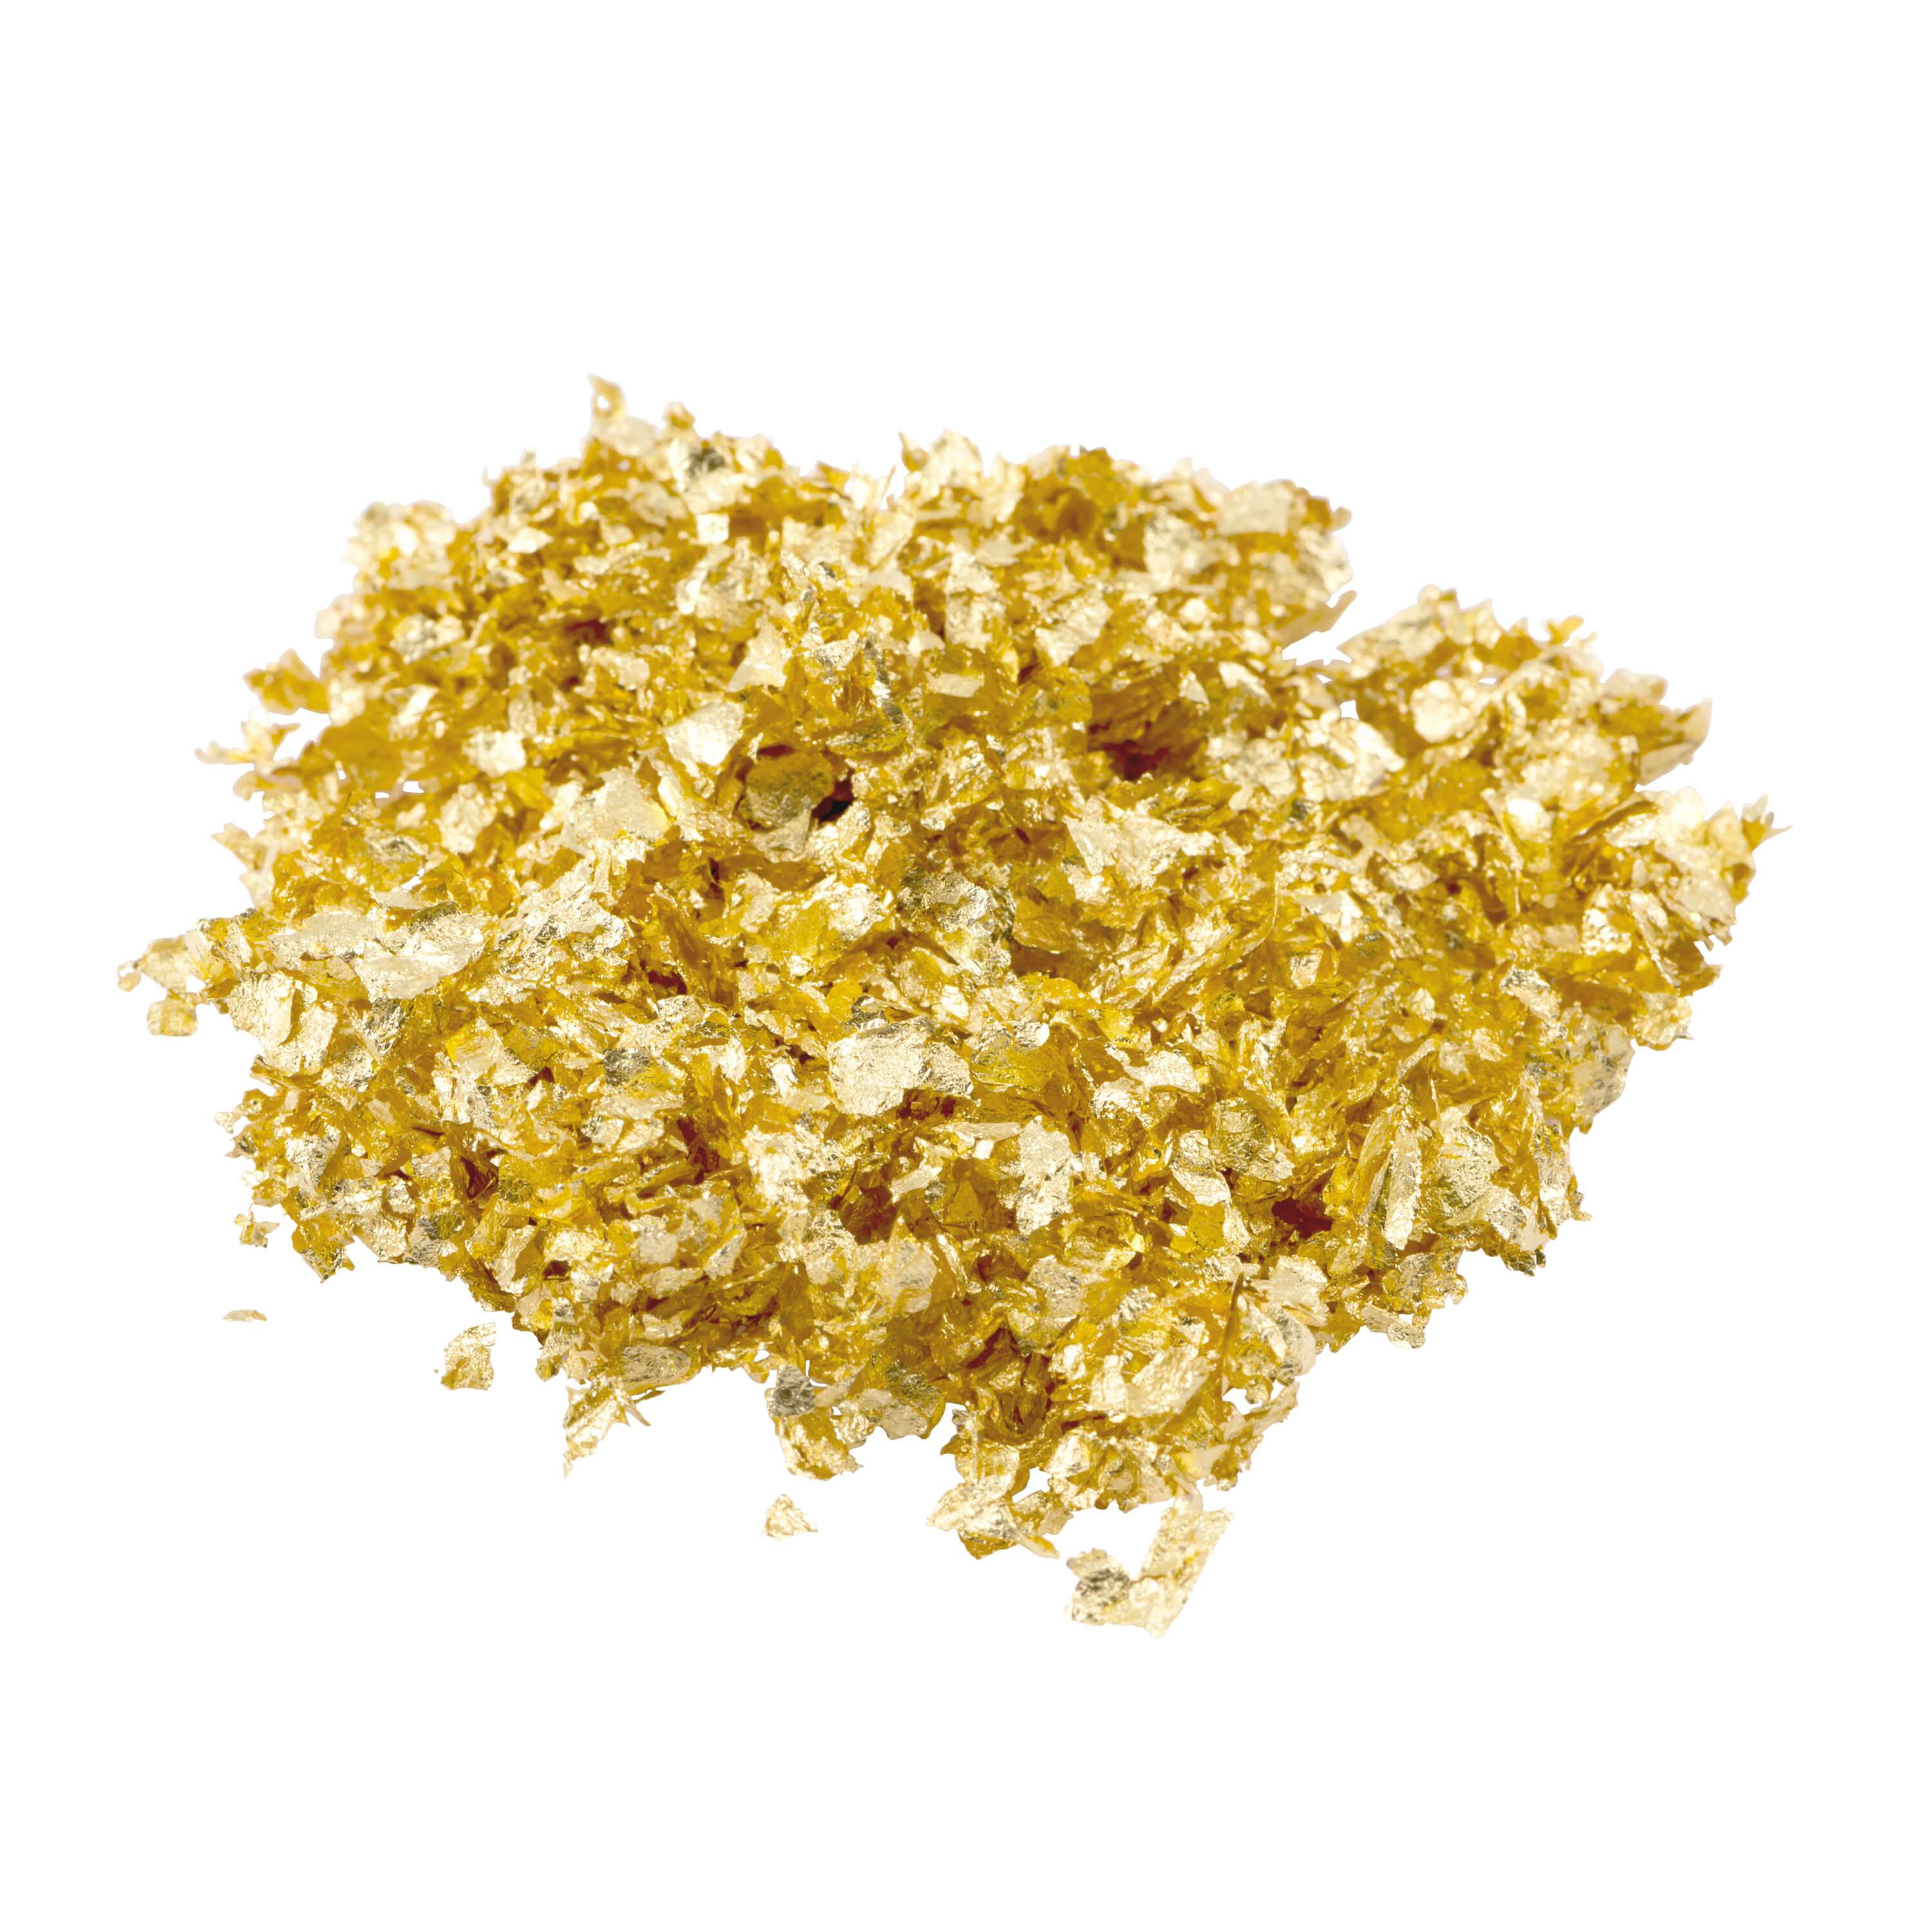 goldz: Feuille d'or comestible 24K - Feuille d'or Belgium